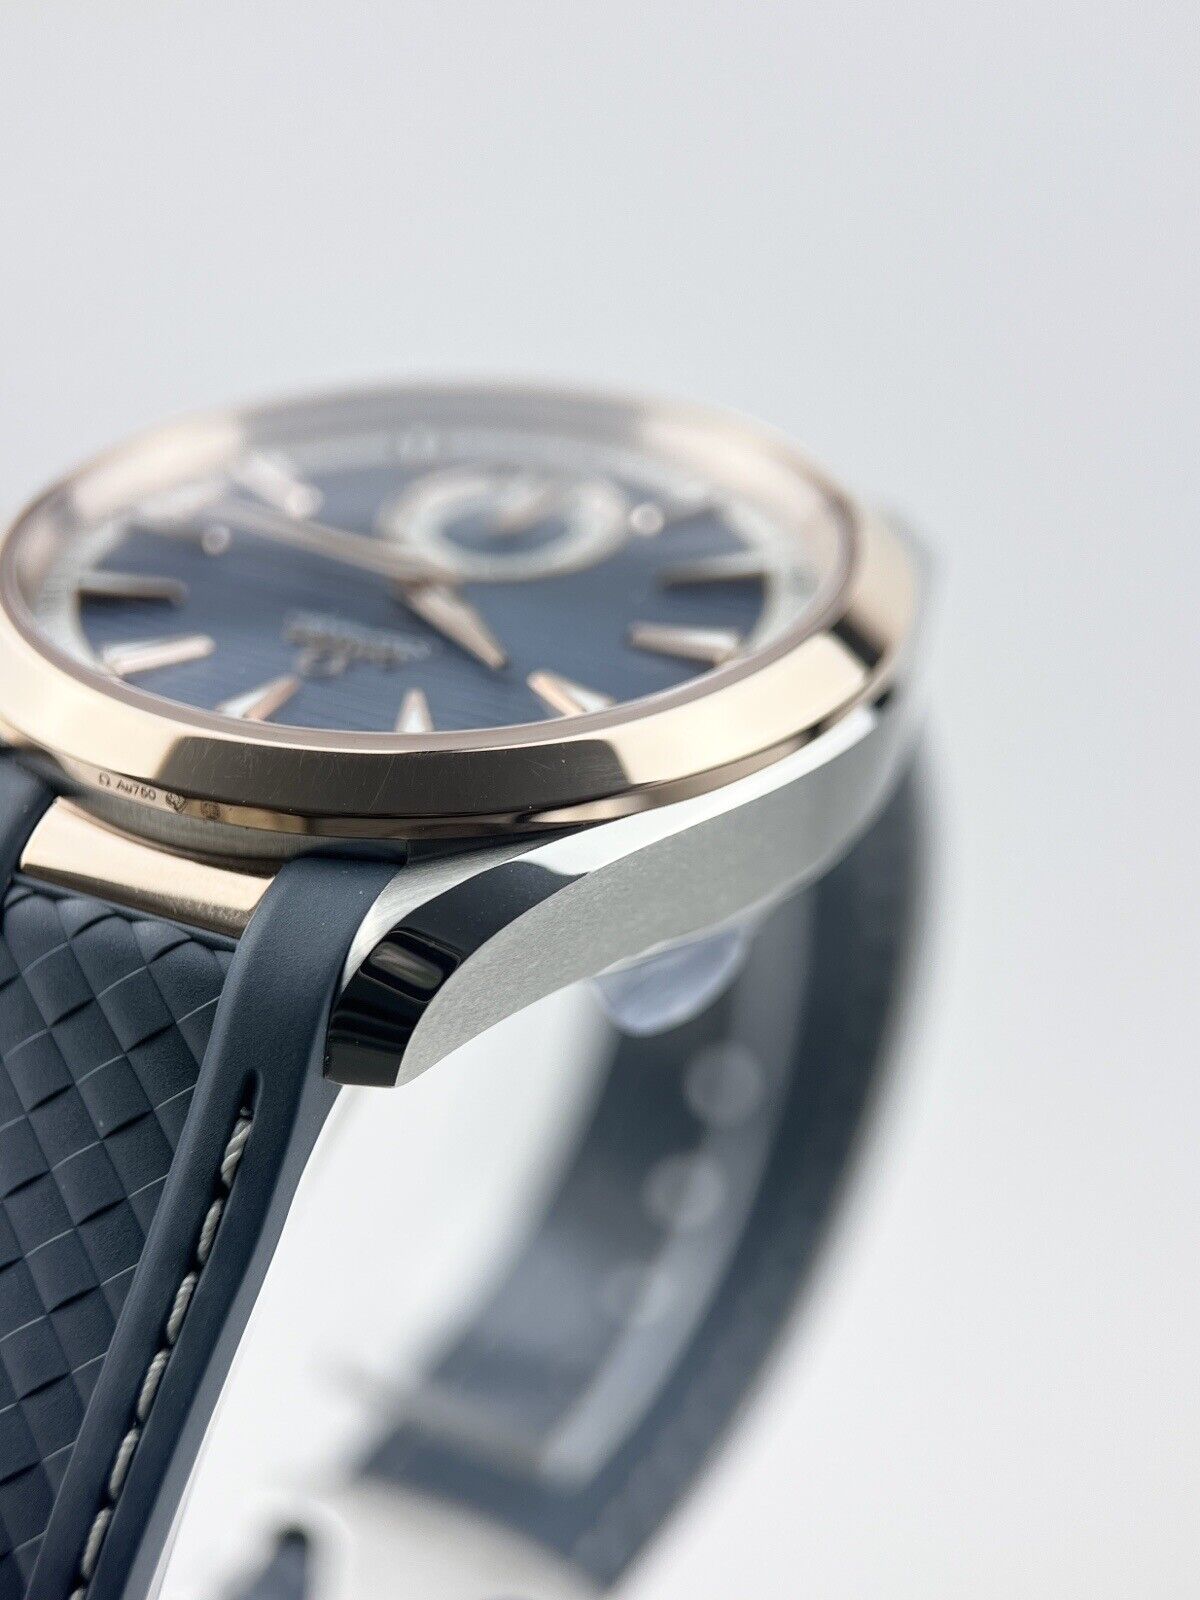 Omega Seamaster Aqua Terra 220.22.41.21.03.001 Blue 41mm Steel & Rose Gold Watch